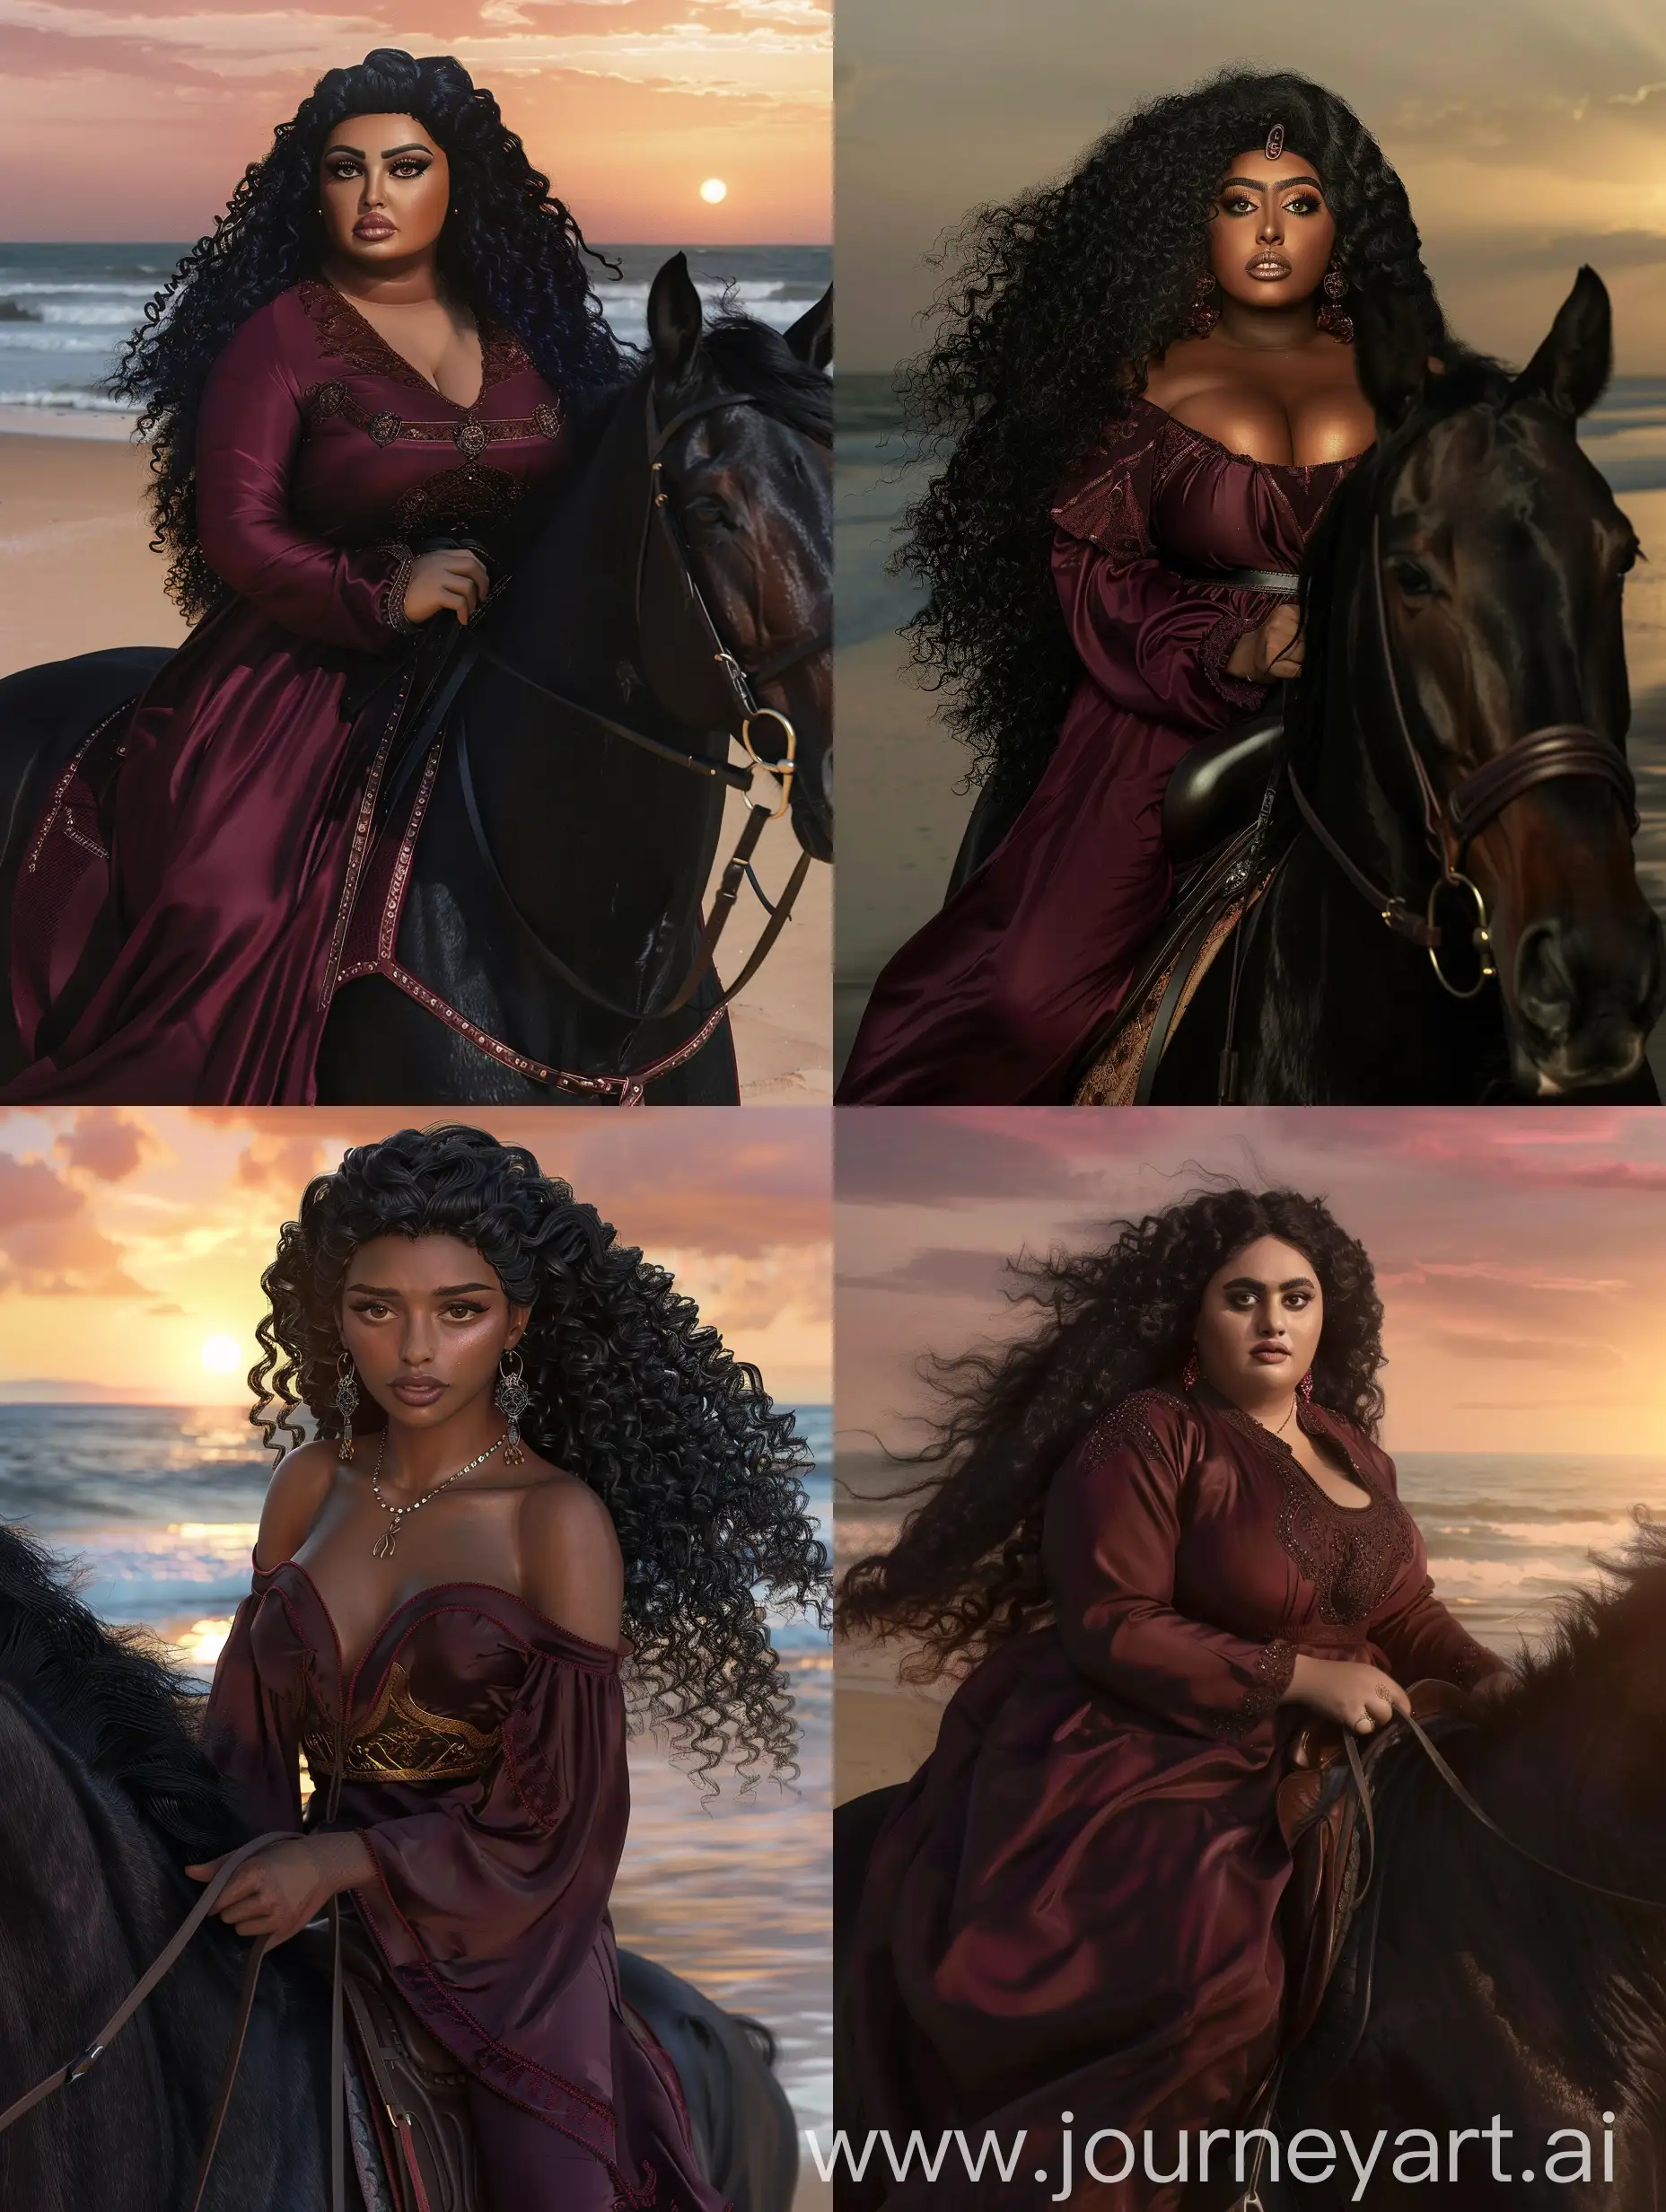 Kuwaiti-Woman-in-Traditional-Attire-Riding-a-Black-Arabian-Horse-on-a-Sunset-Beach